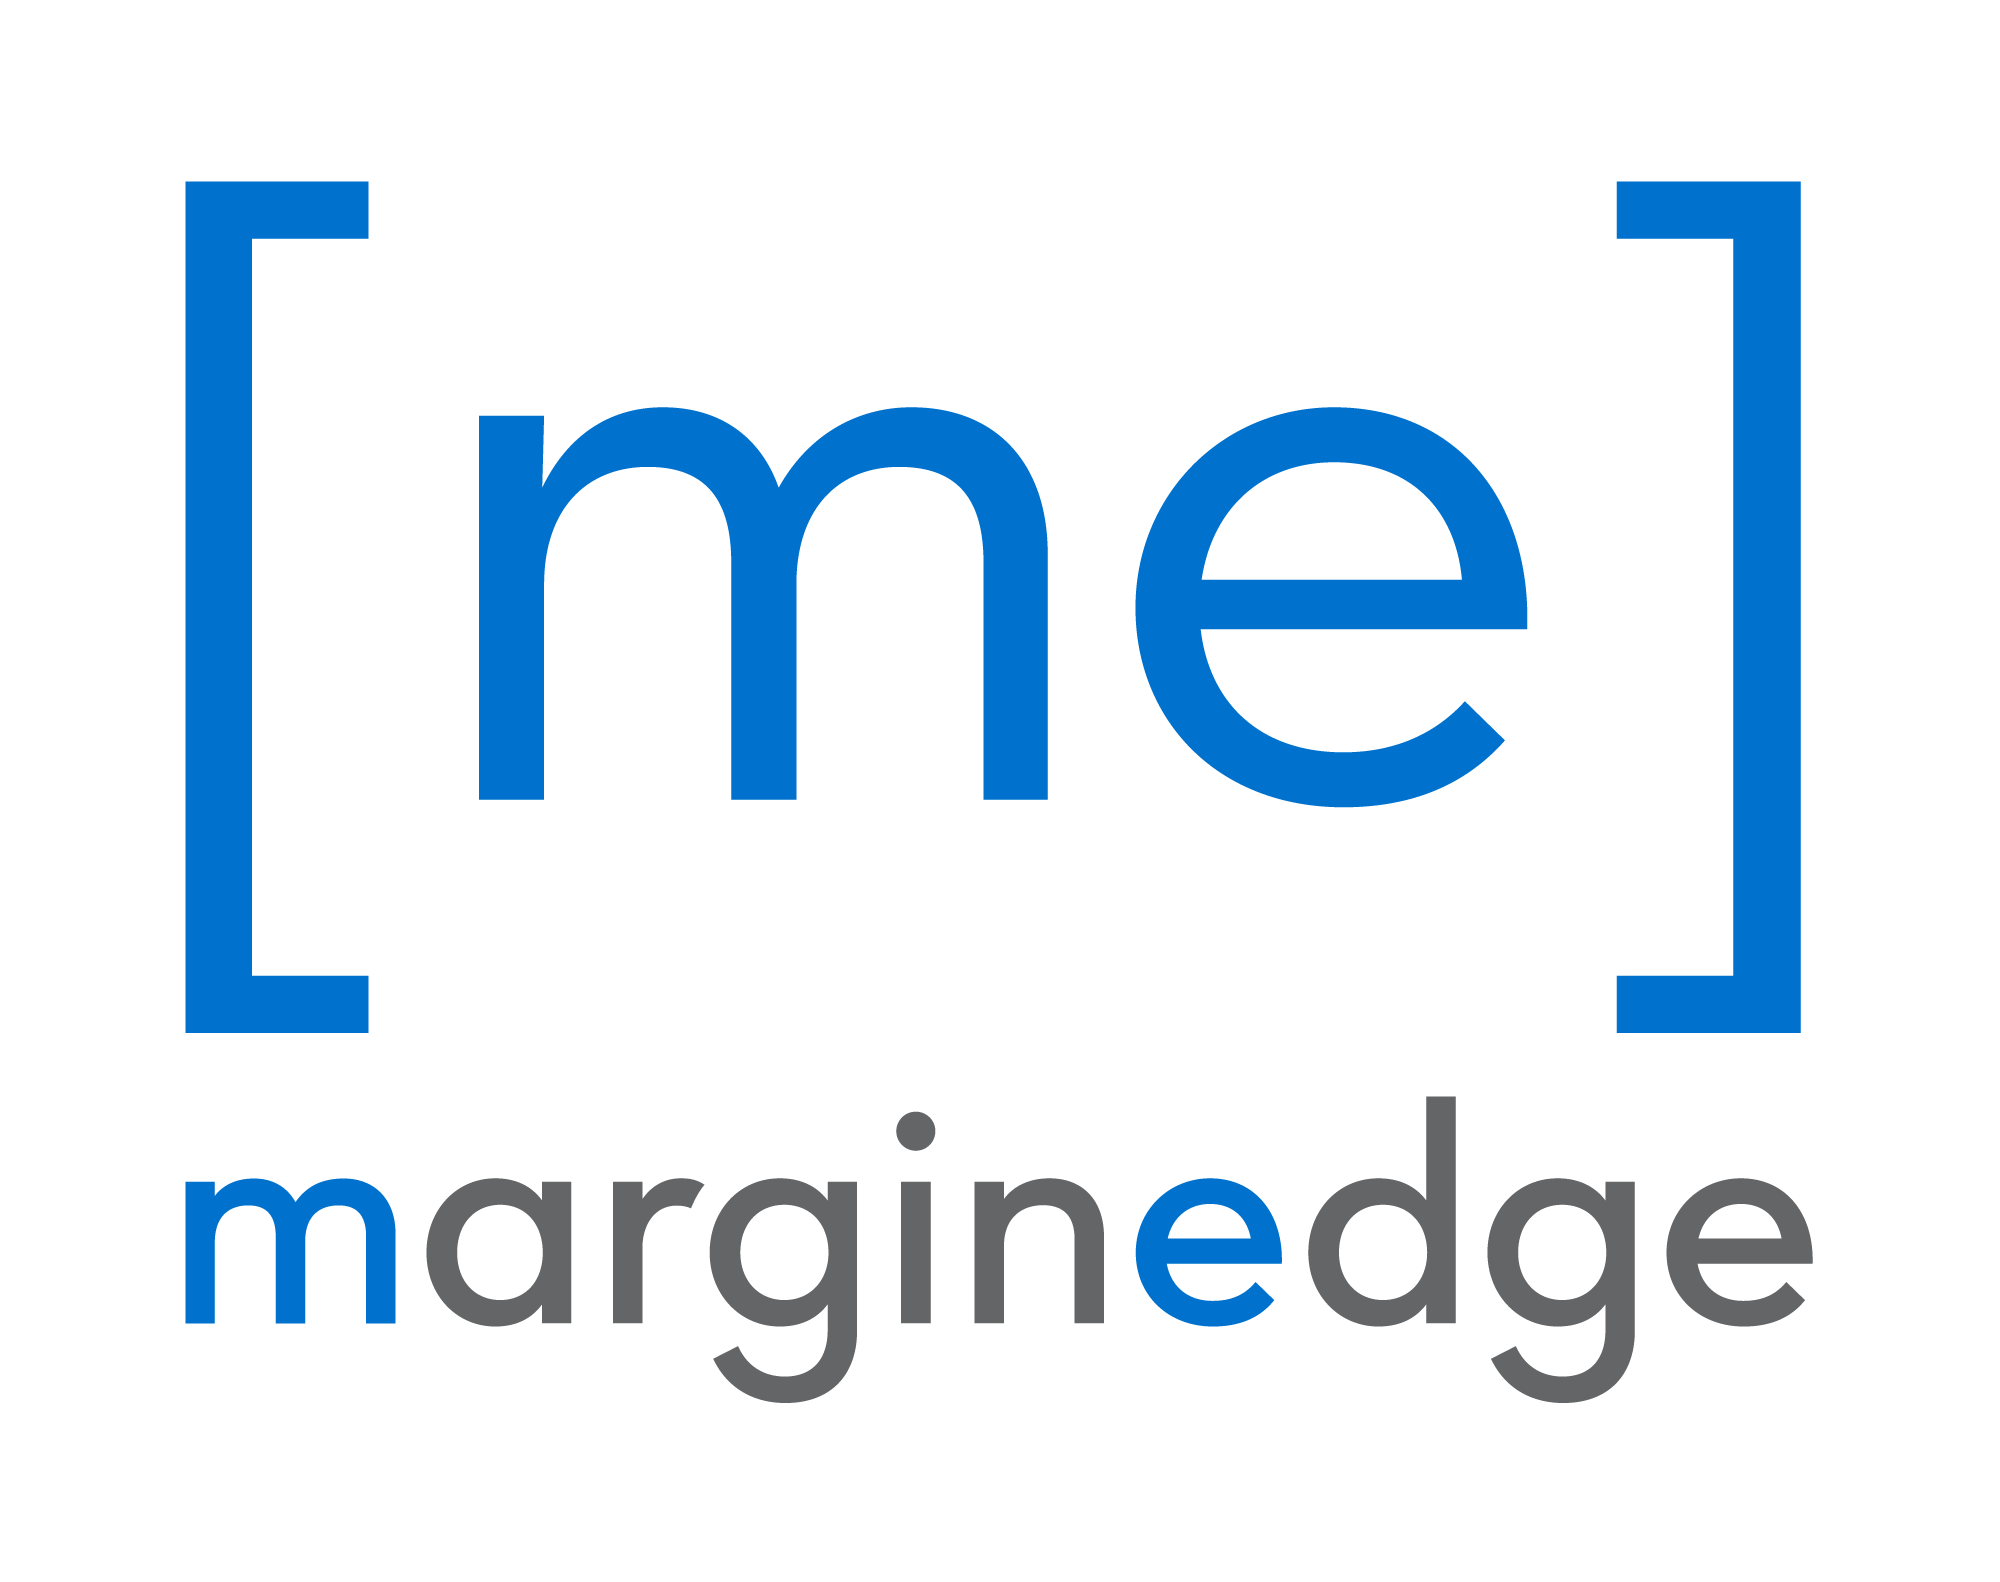 MarginEdge Logo.png